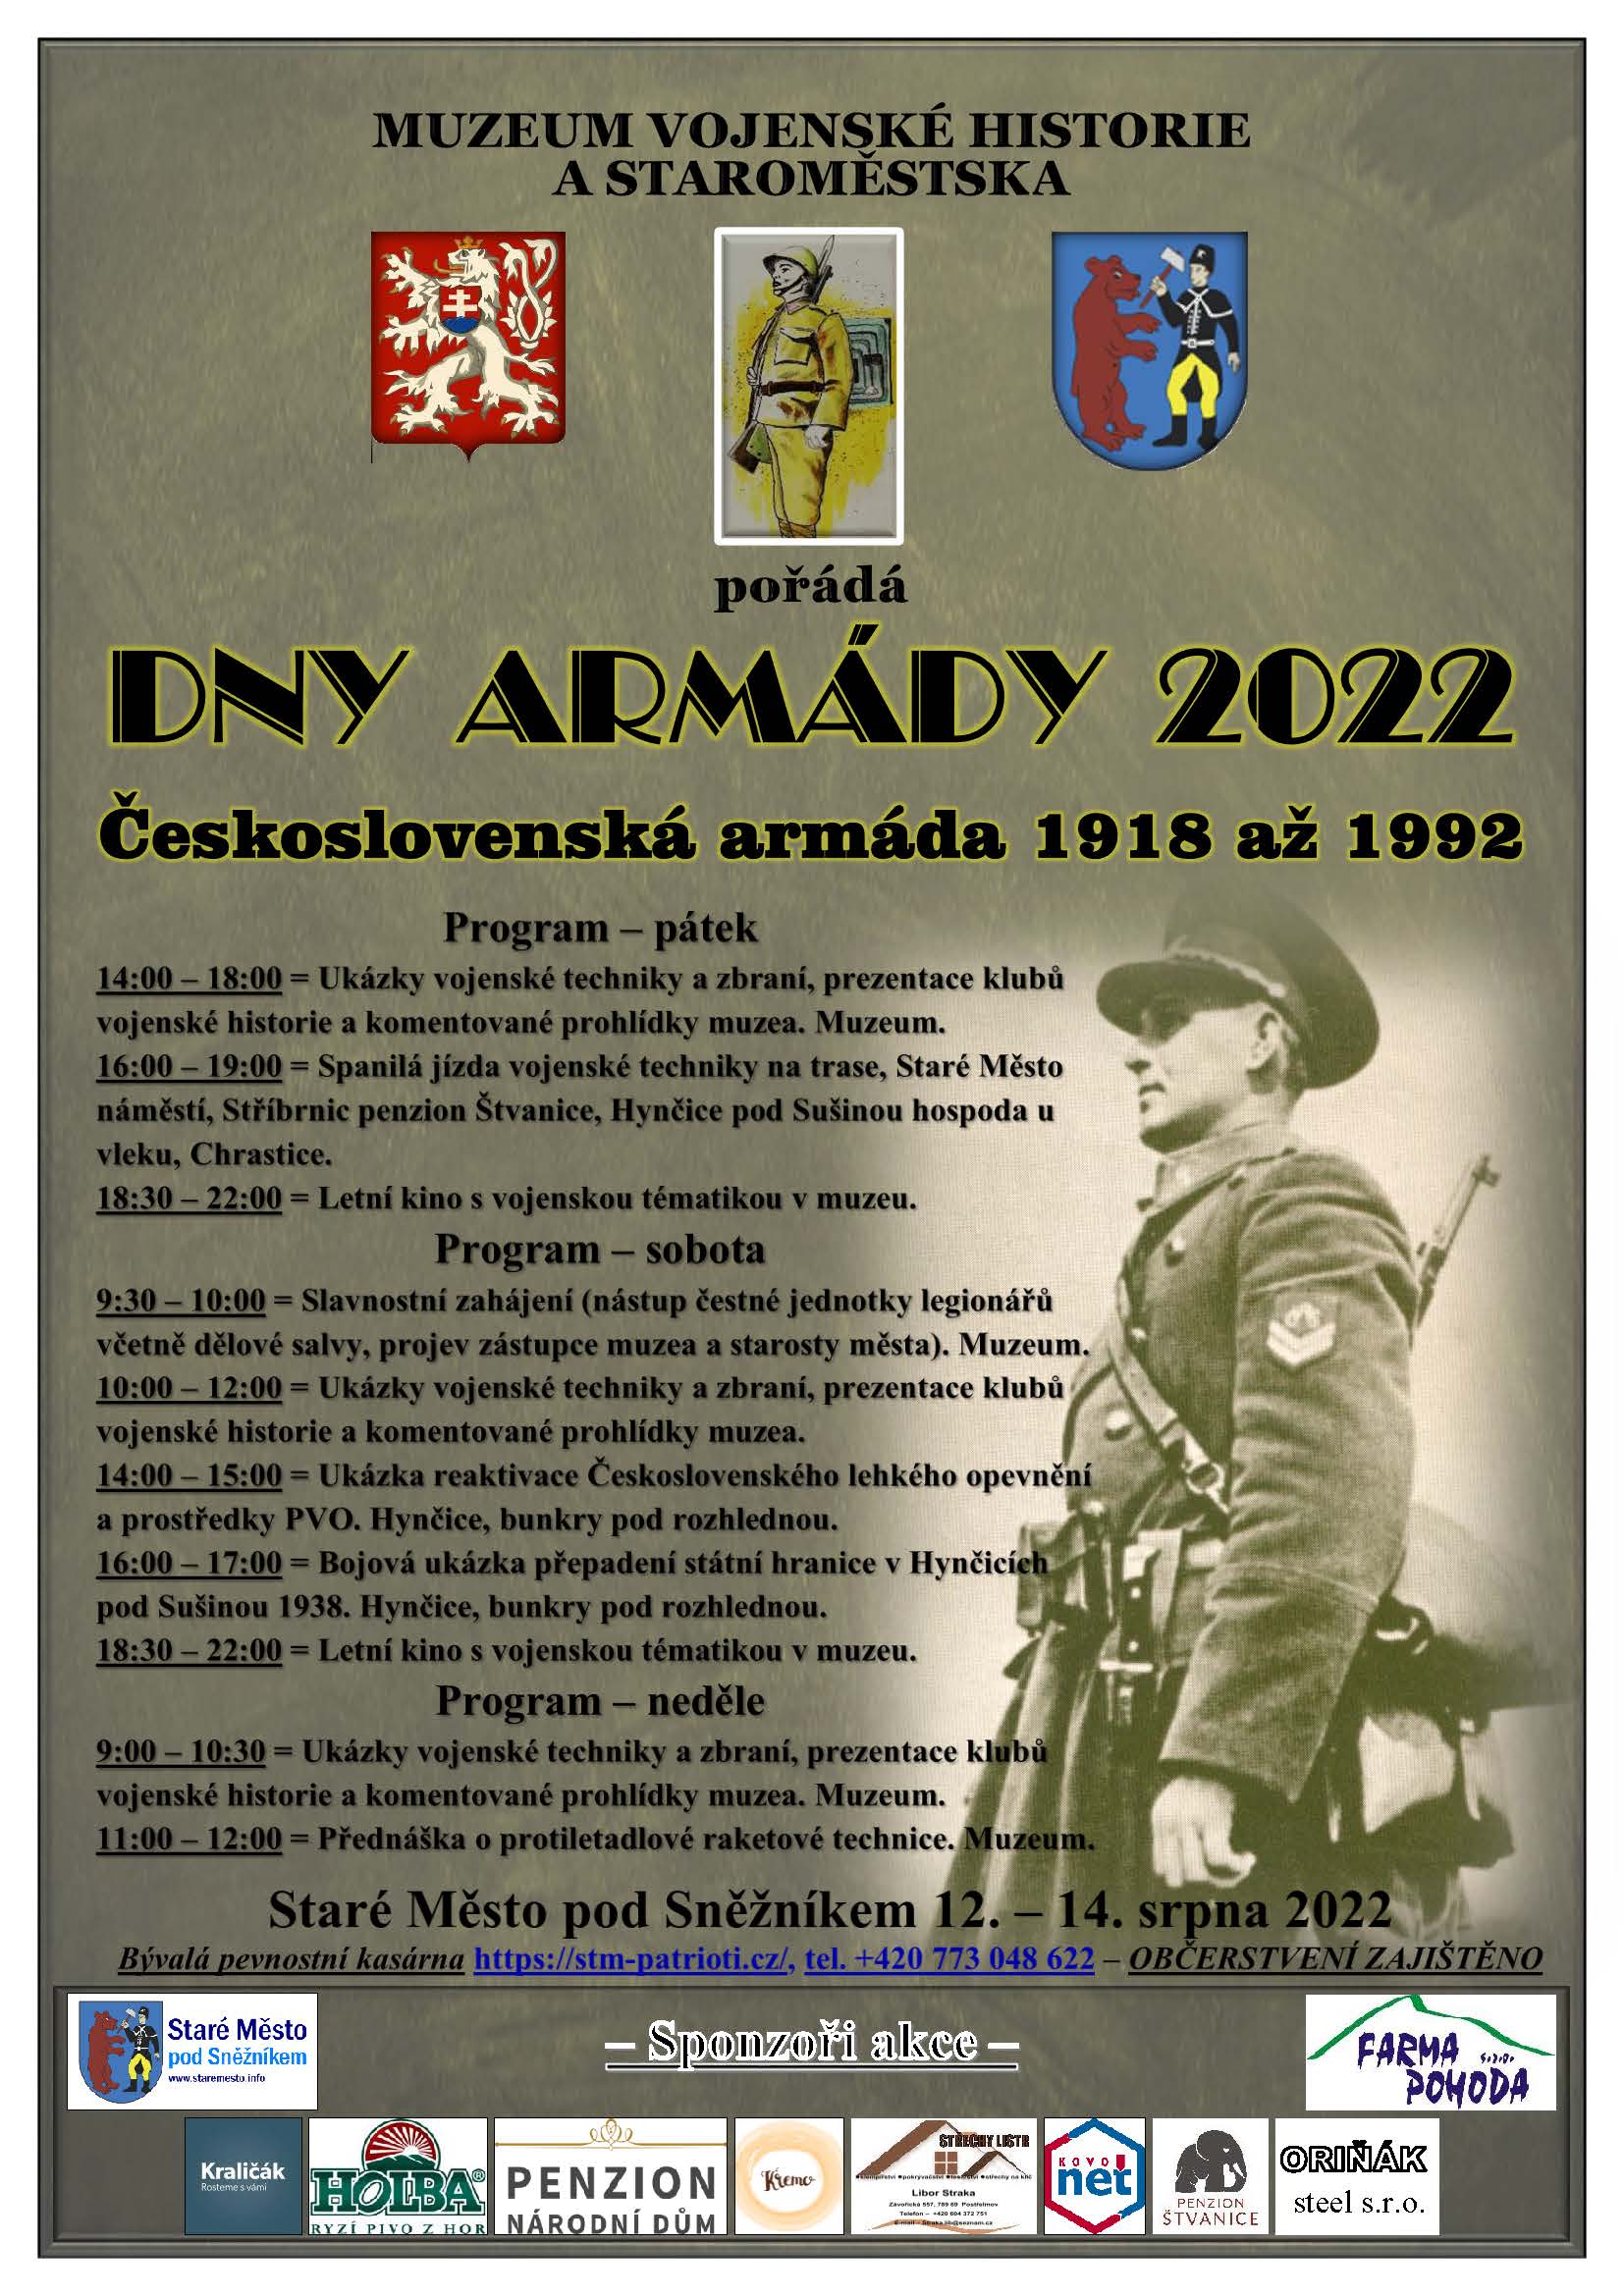 Invitation - Army Days 2022